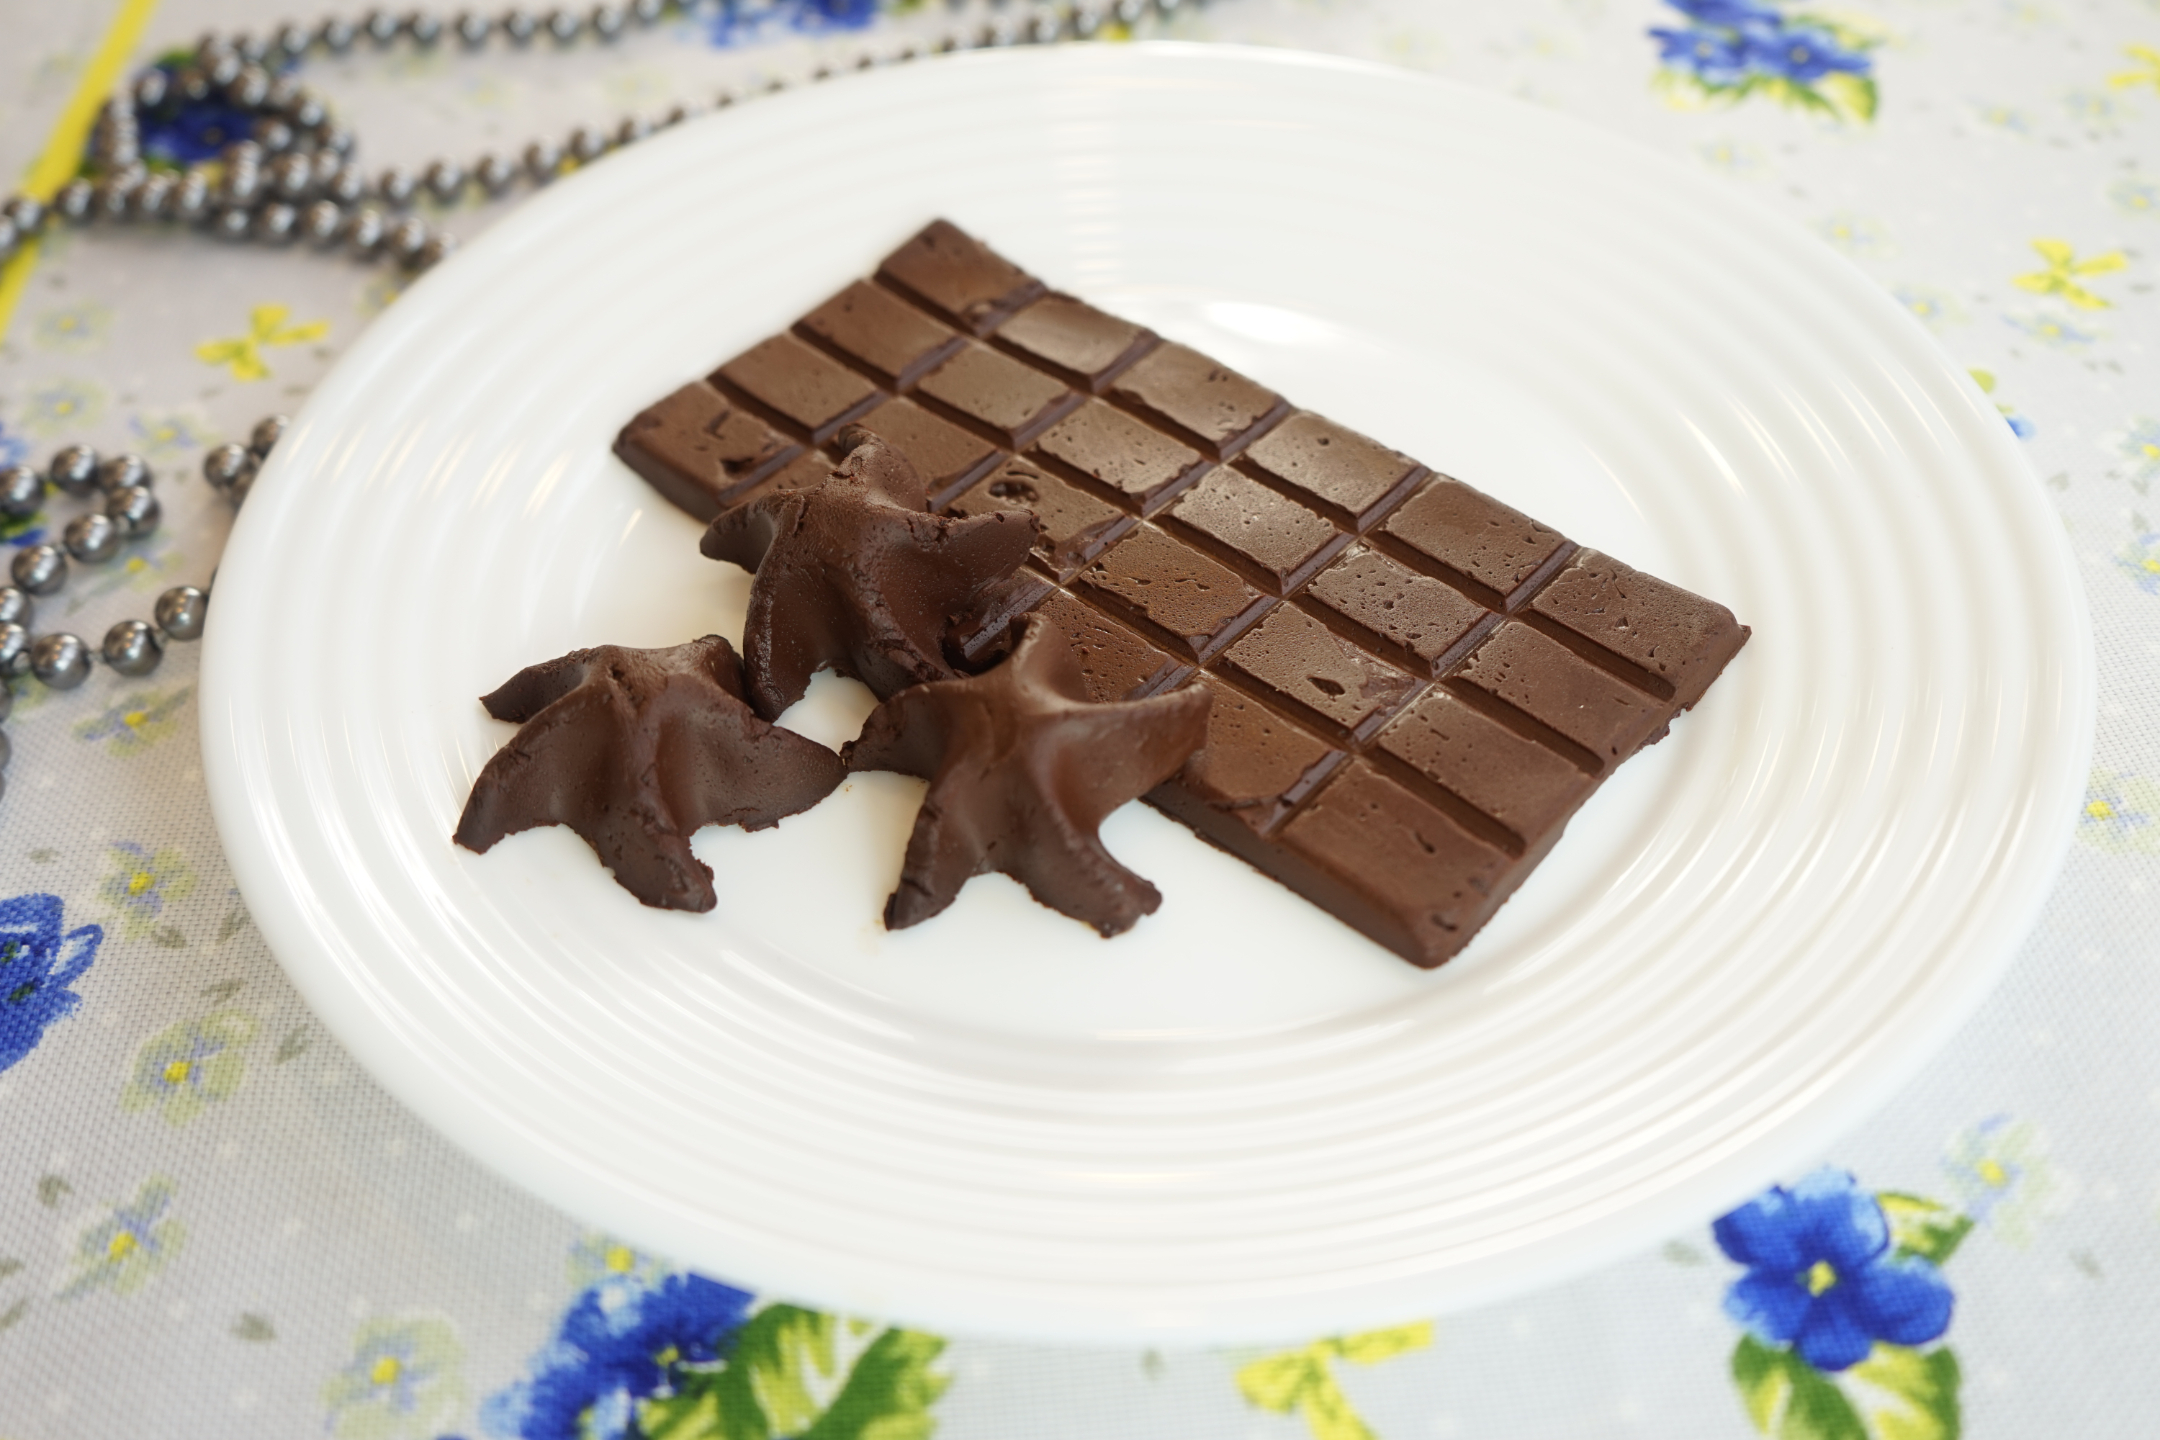 Домашний Шоколад Рецепт С Фото Пошагово